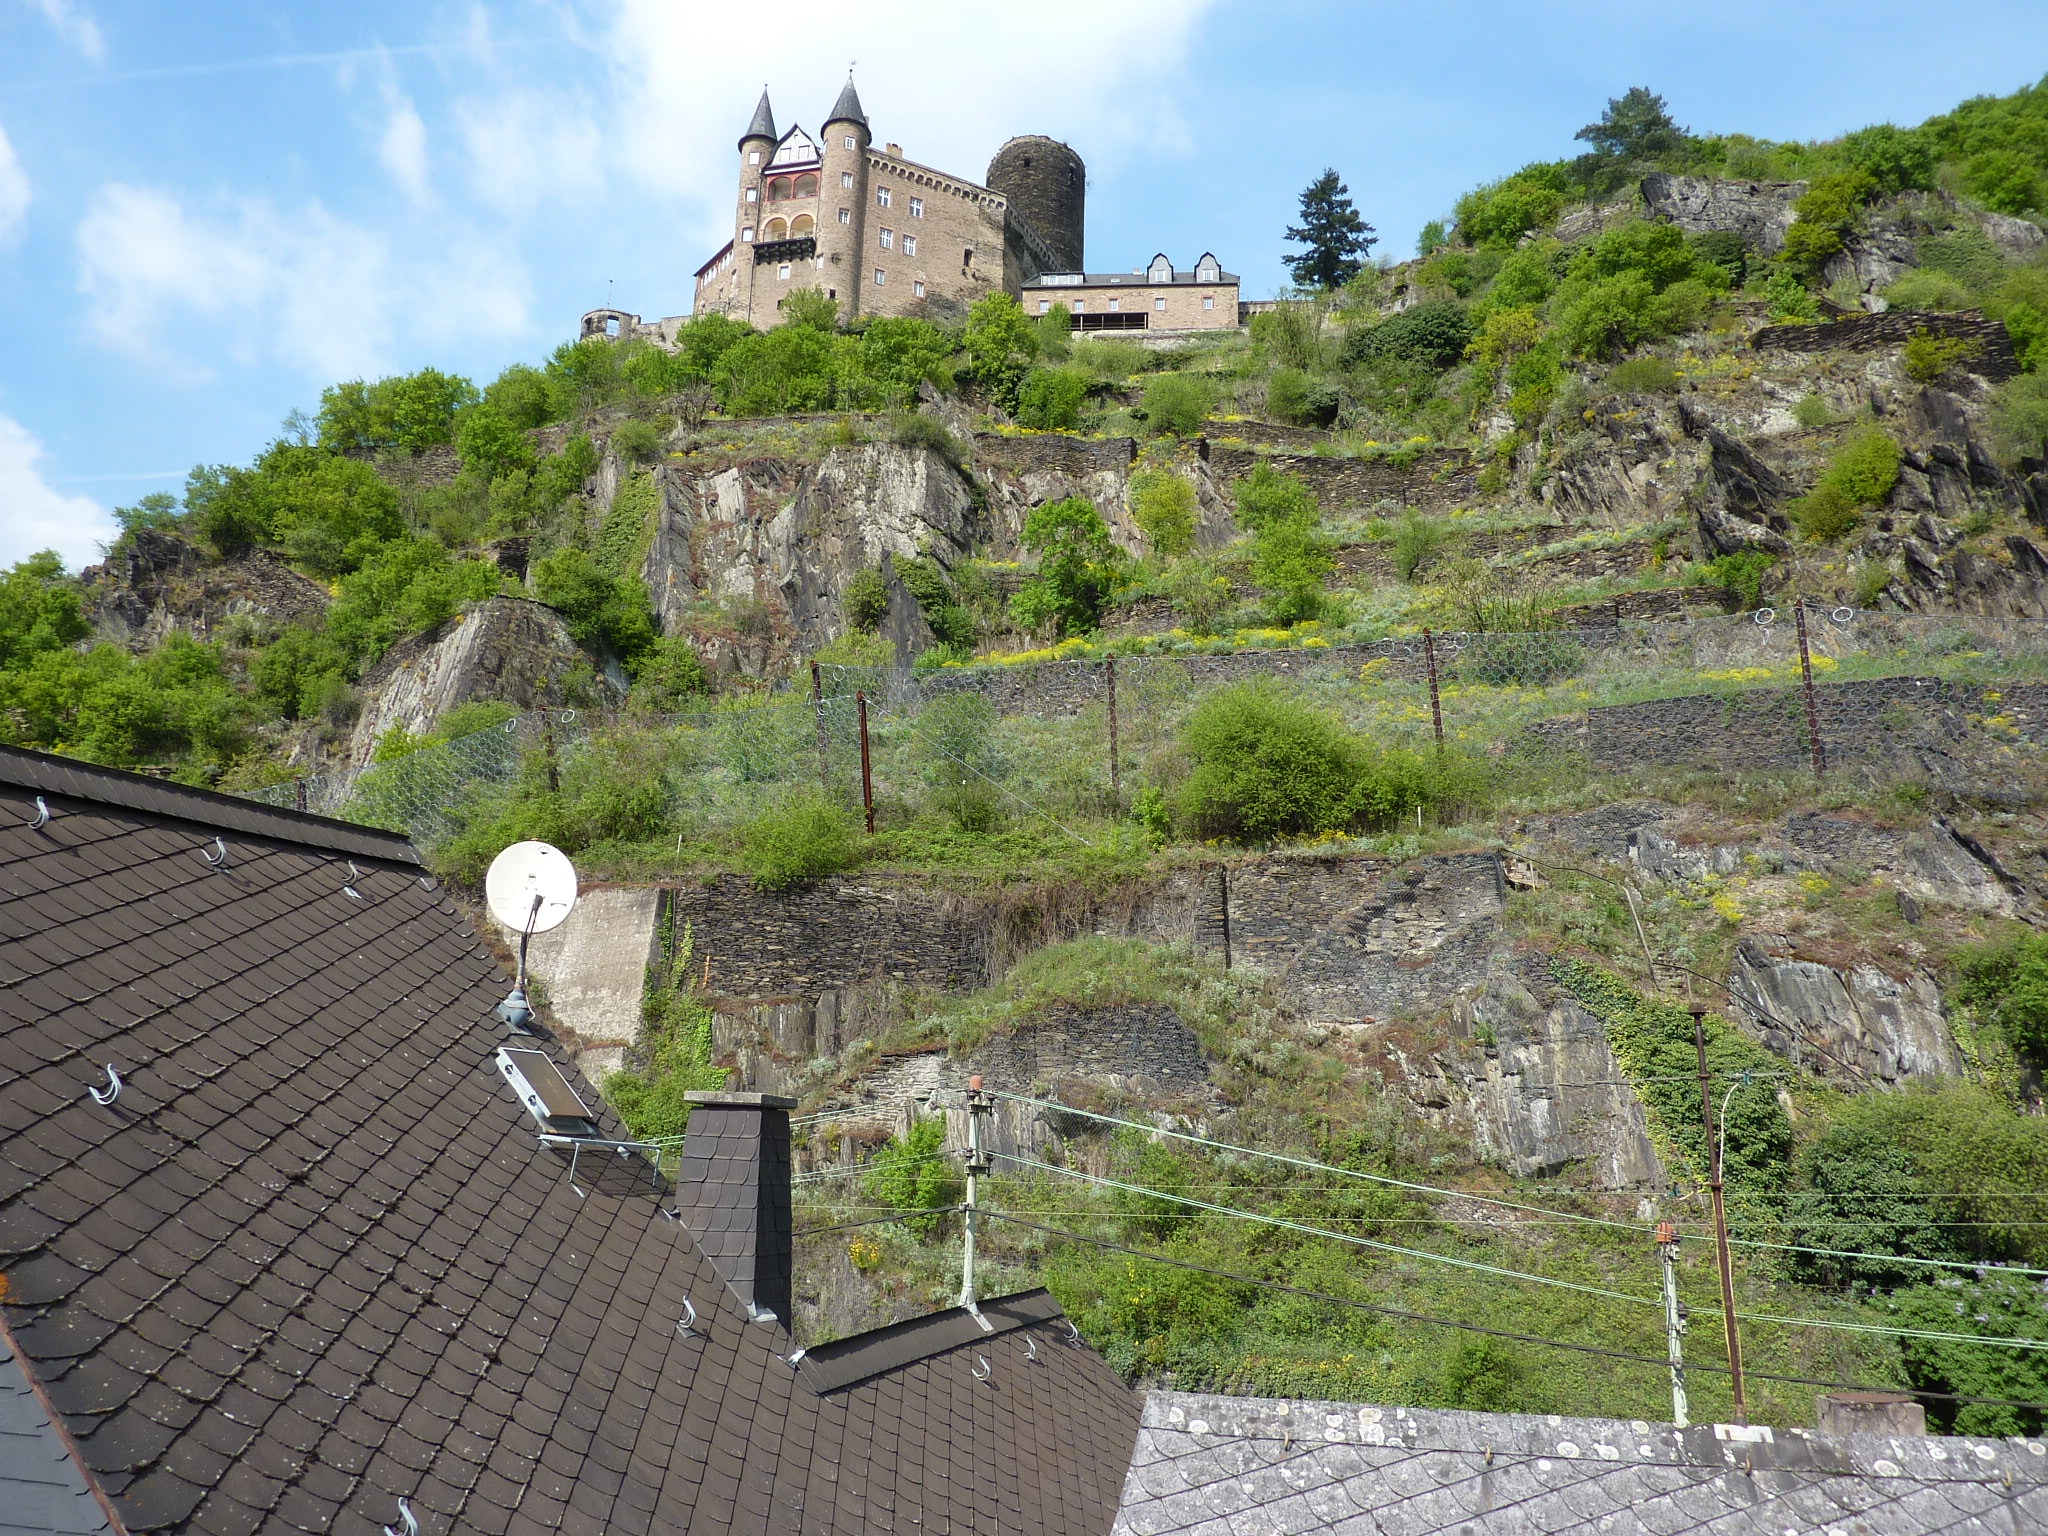 Burg Katz oberhalb der Altstadt von Sankt Goarshausen